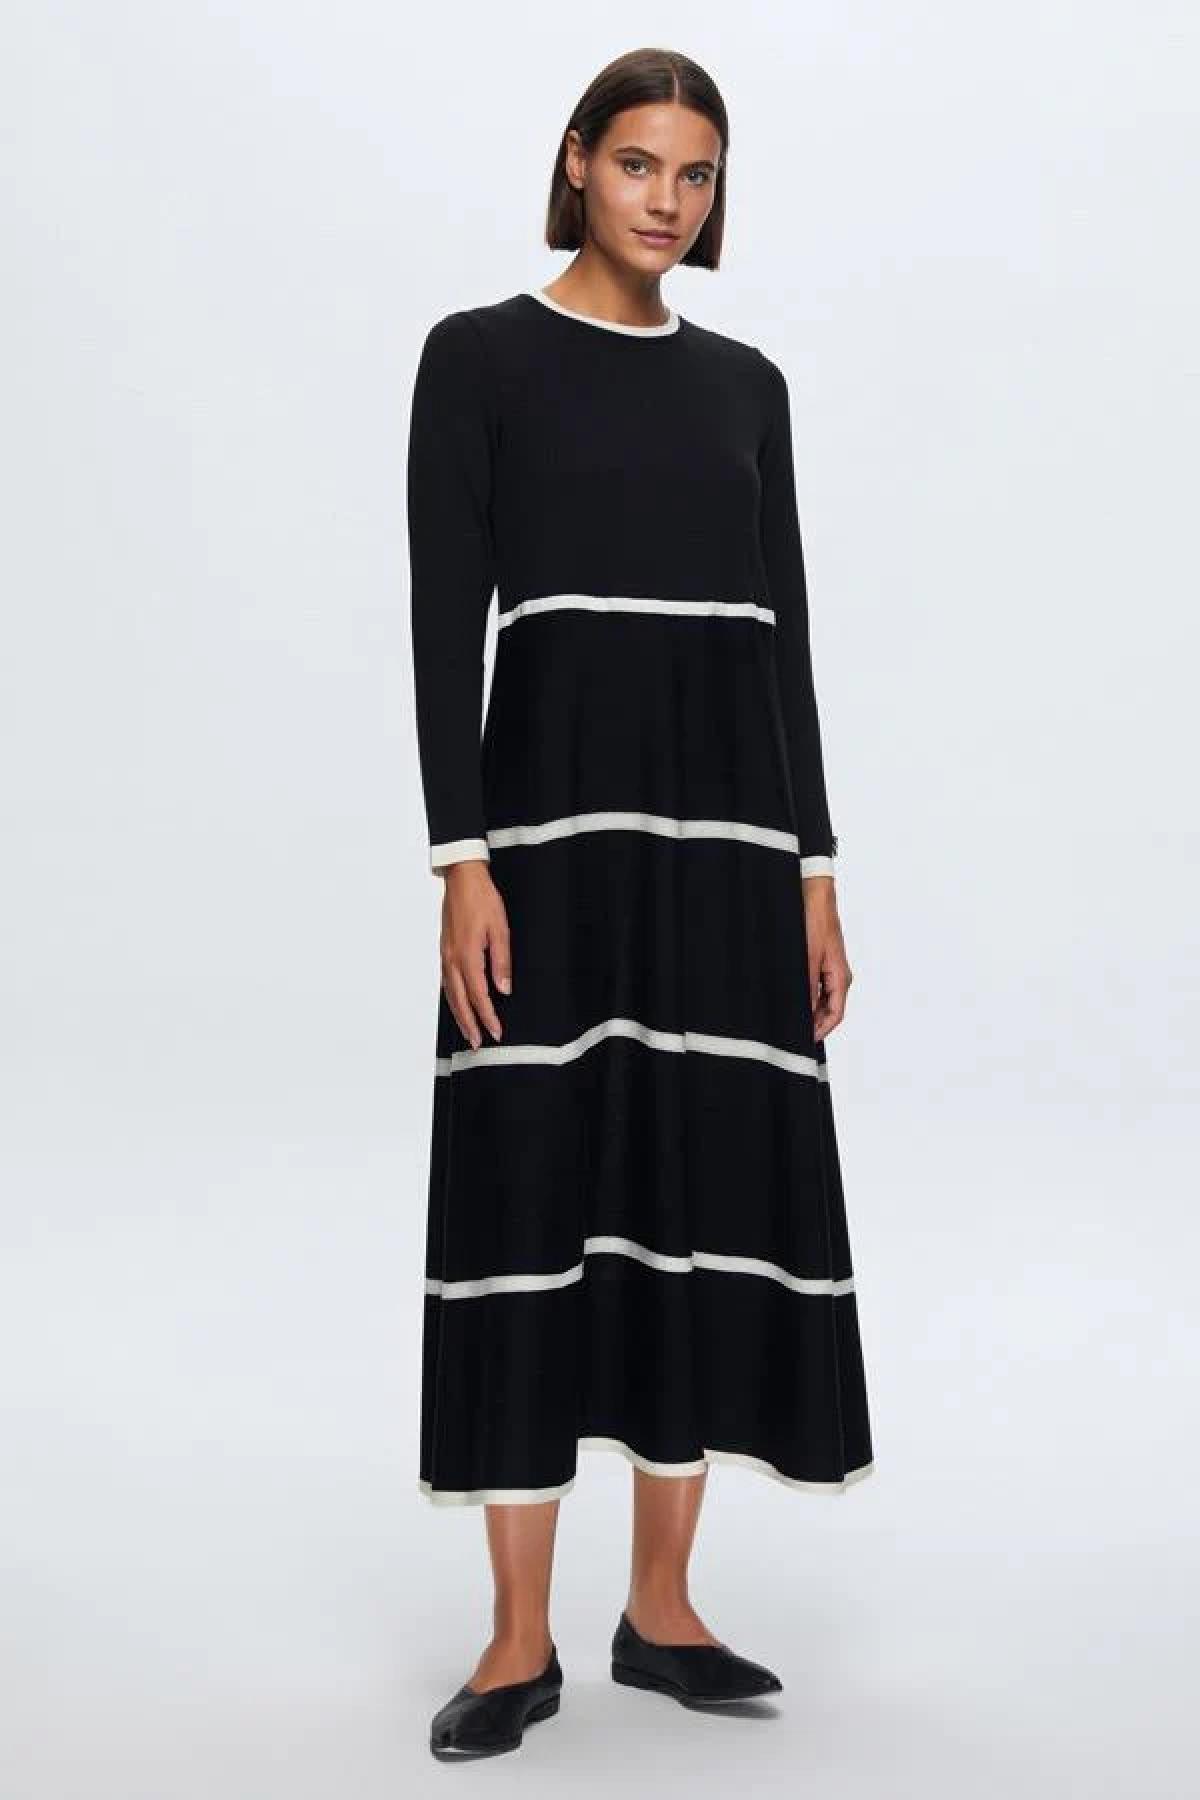 Eser Giyim, Women's Clothing, Evening Dress